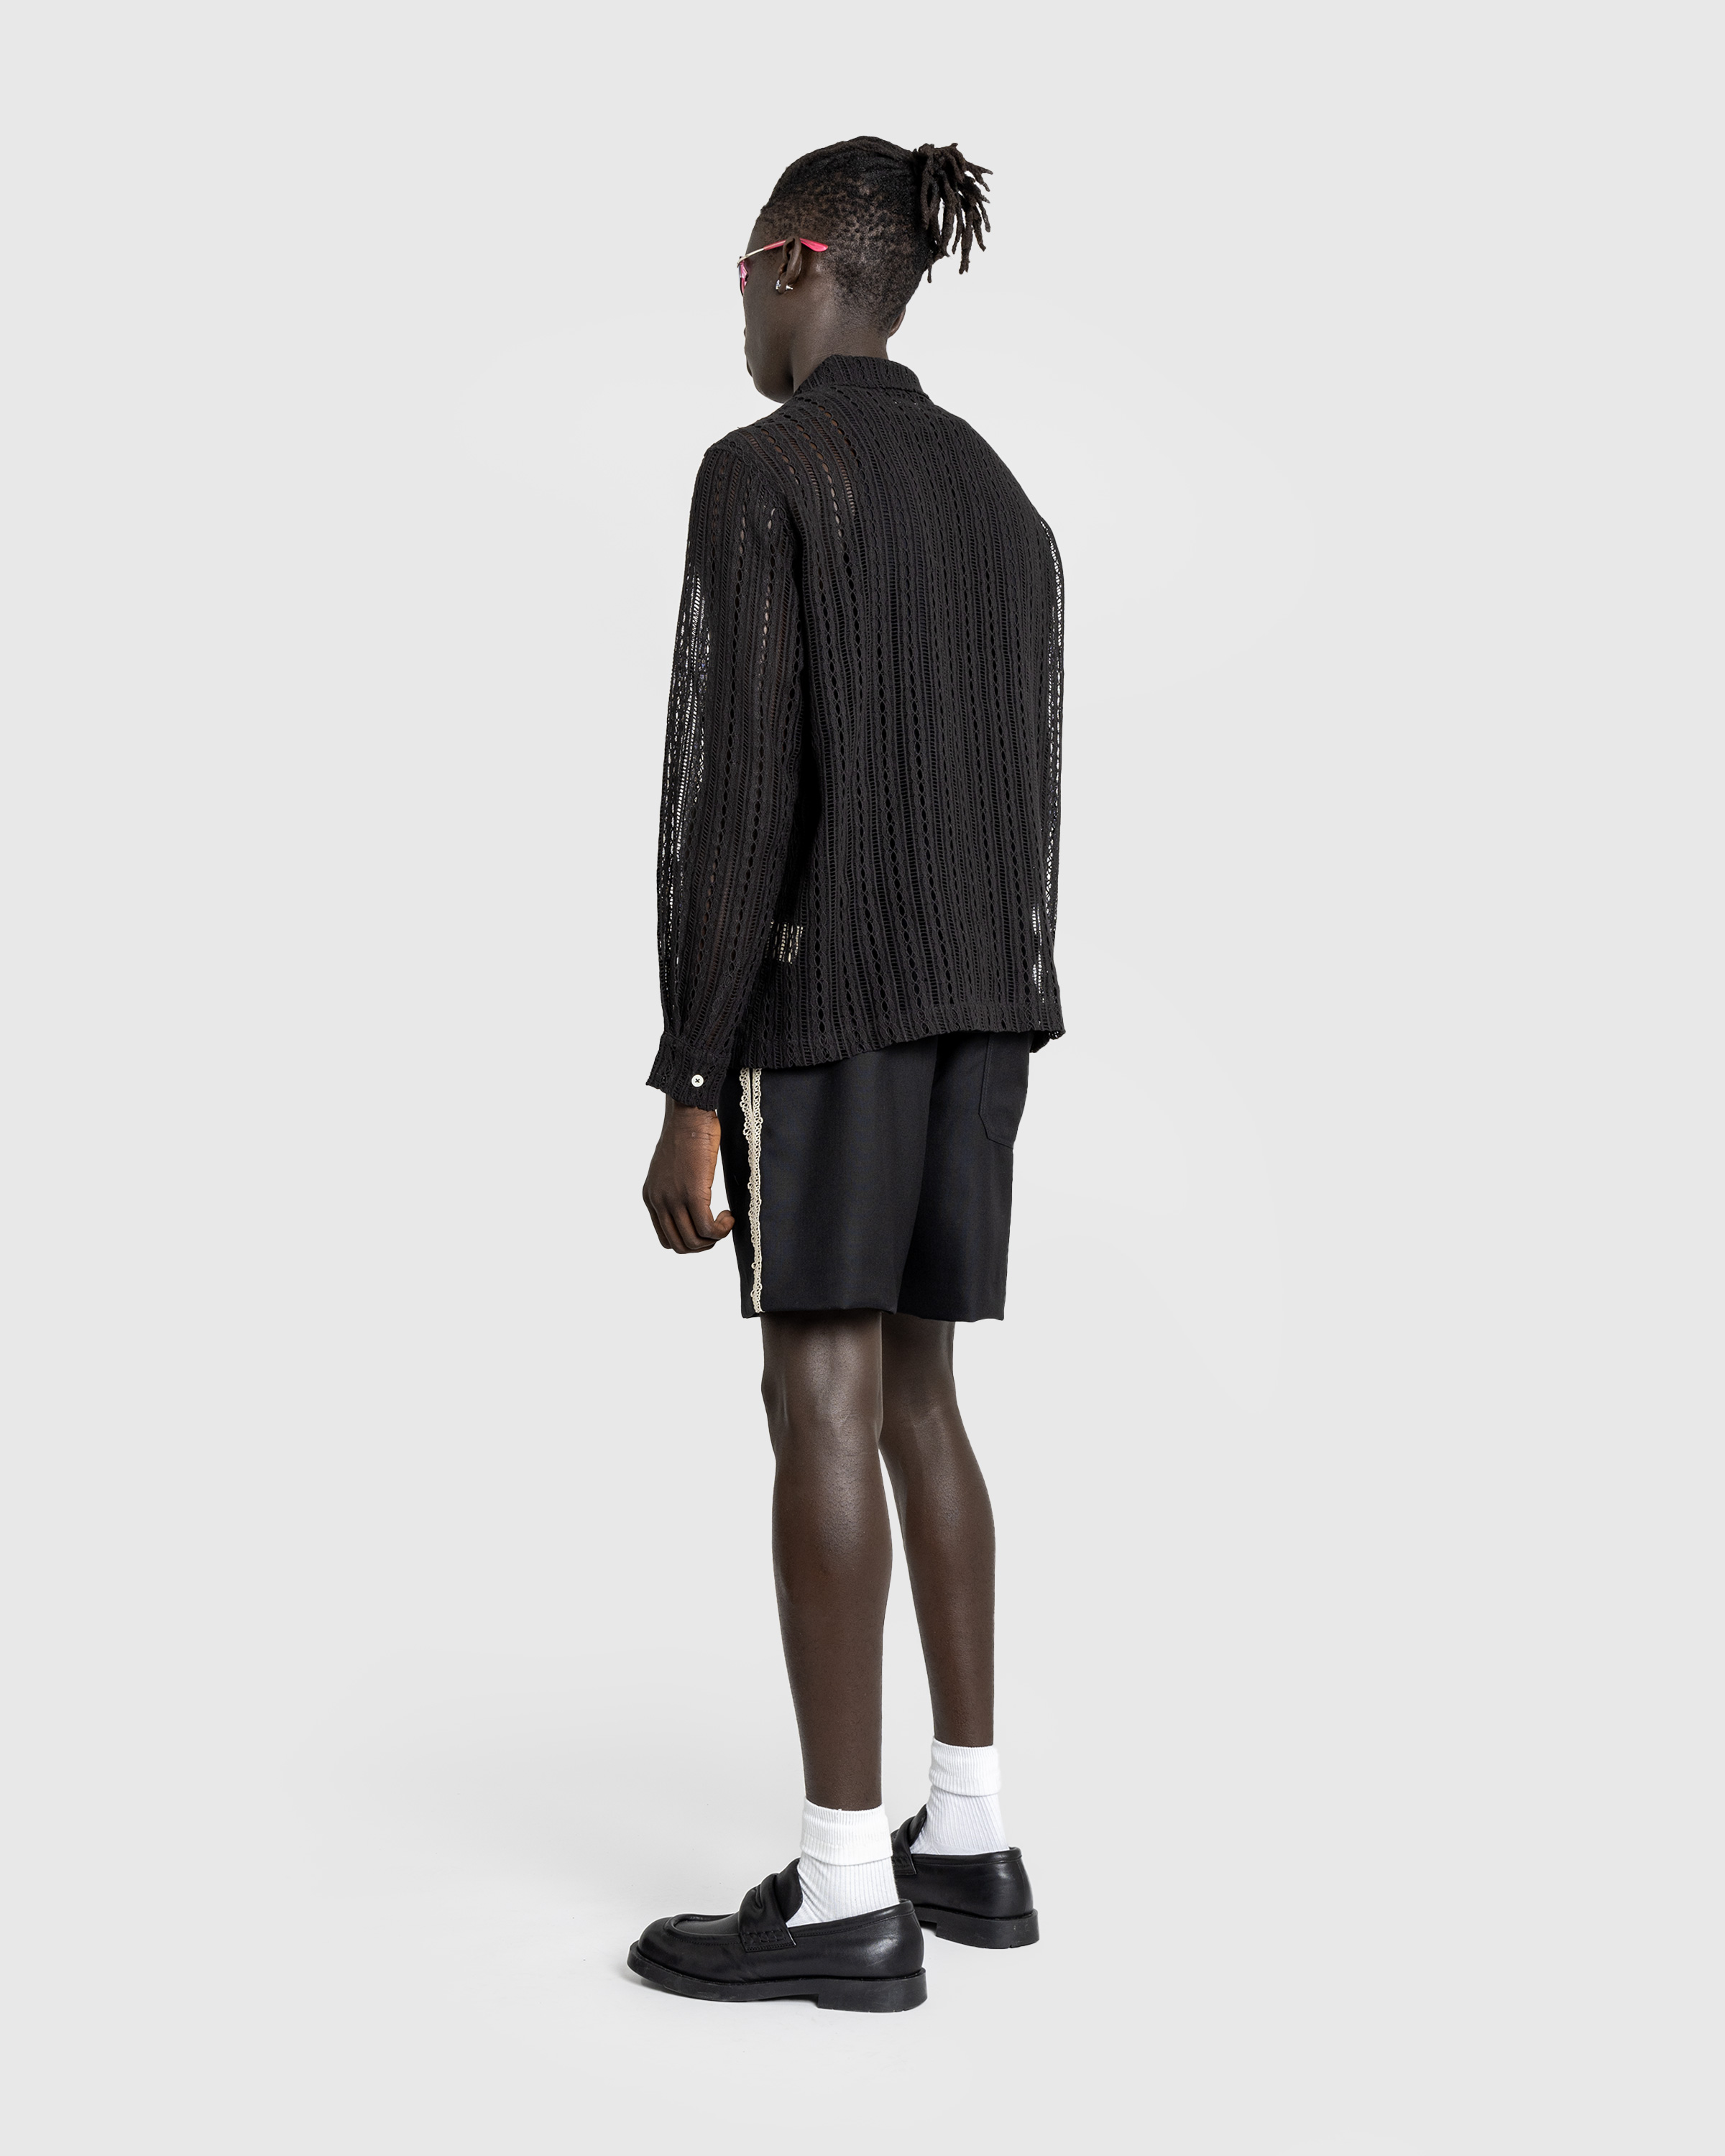 Bode – Lacework Shorts Black - Short Cuts - Black - Image 4